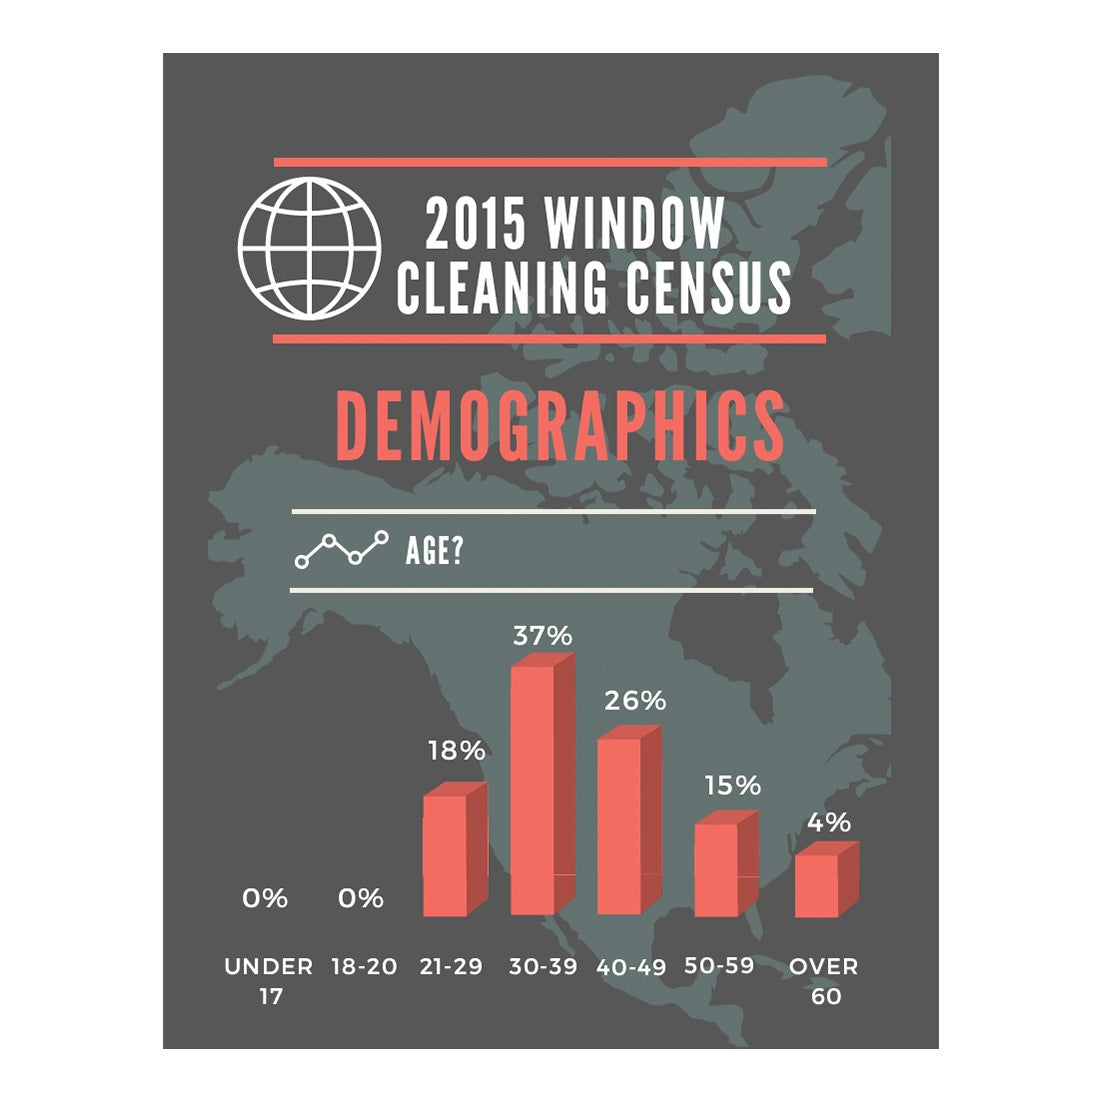 2015 Window Cleaning Census Demographics